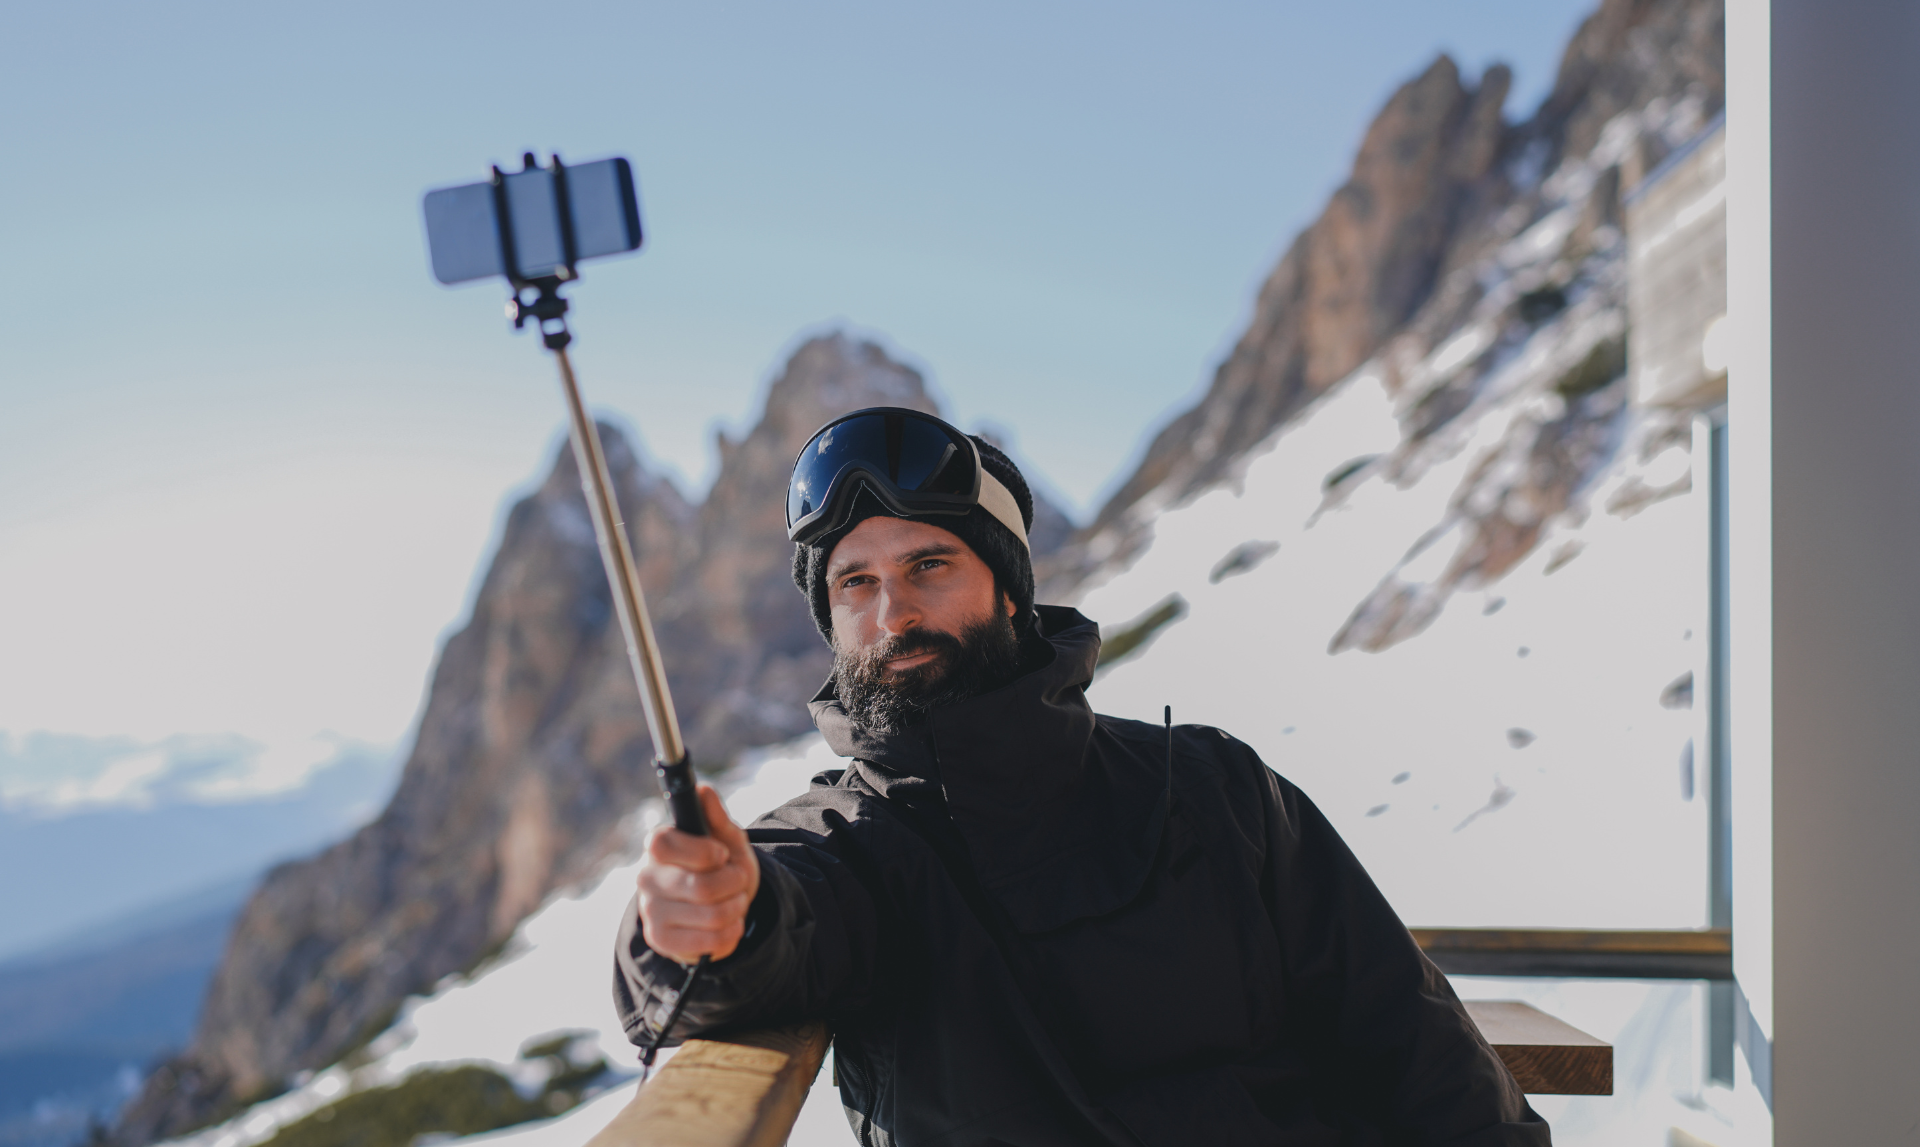 Man taking selfie on skiing holiday